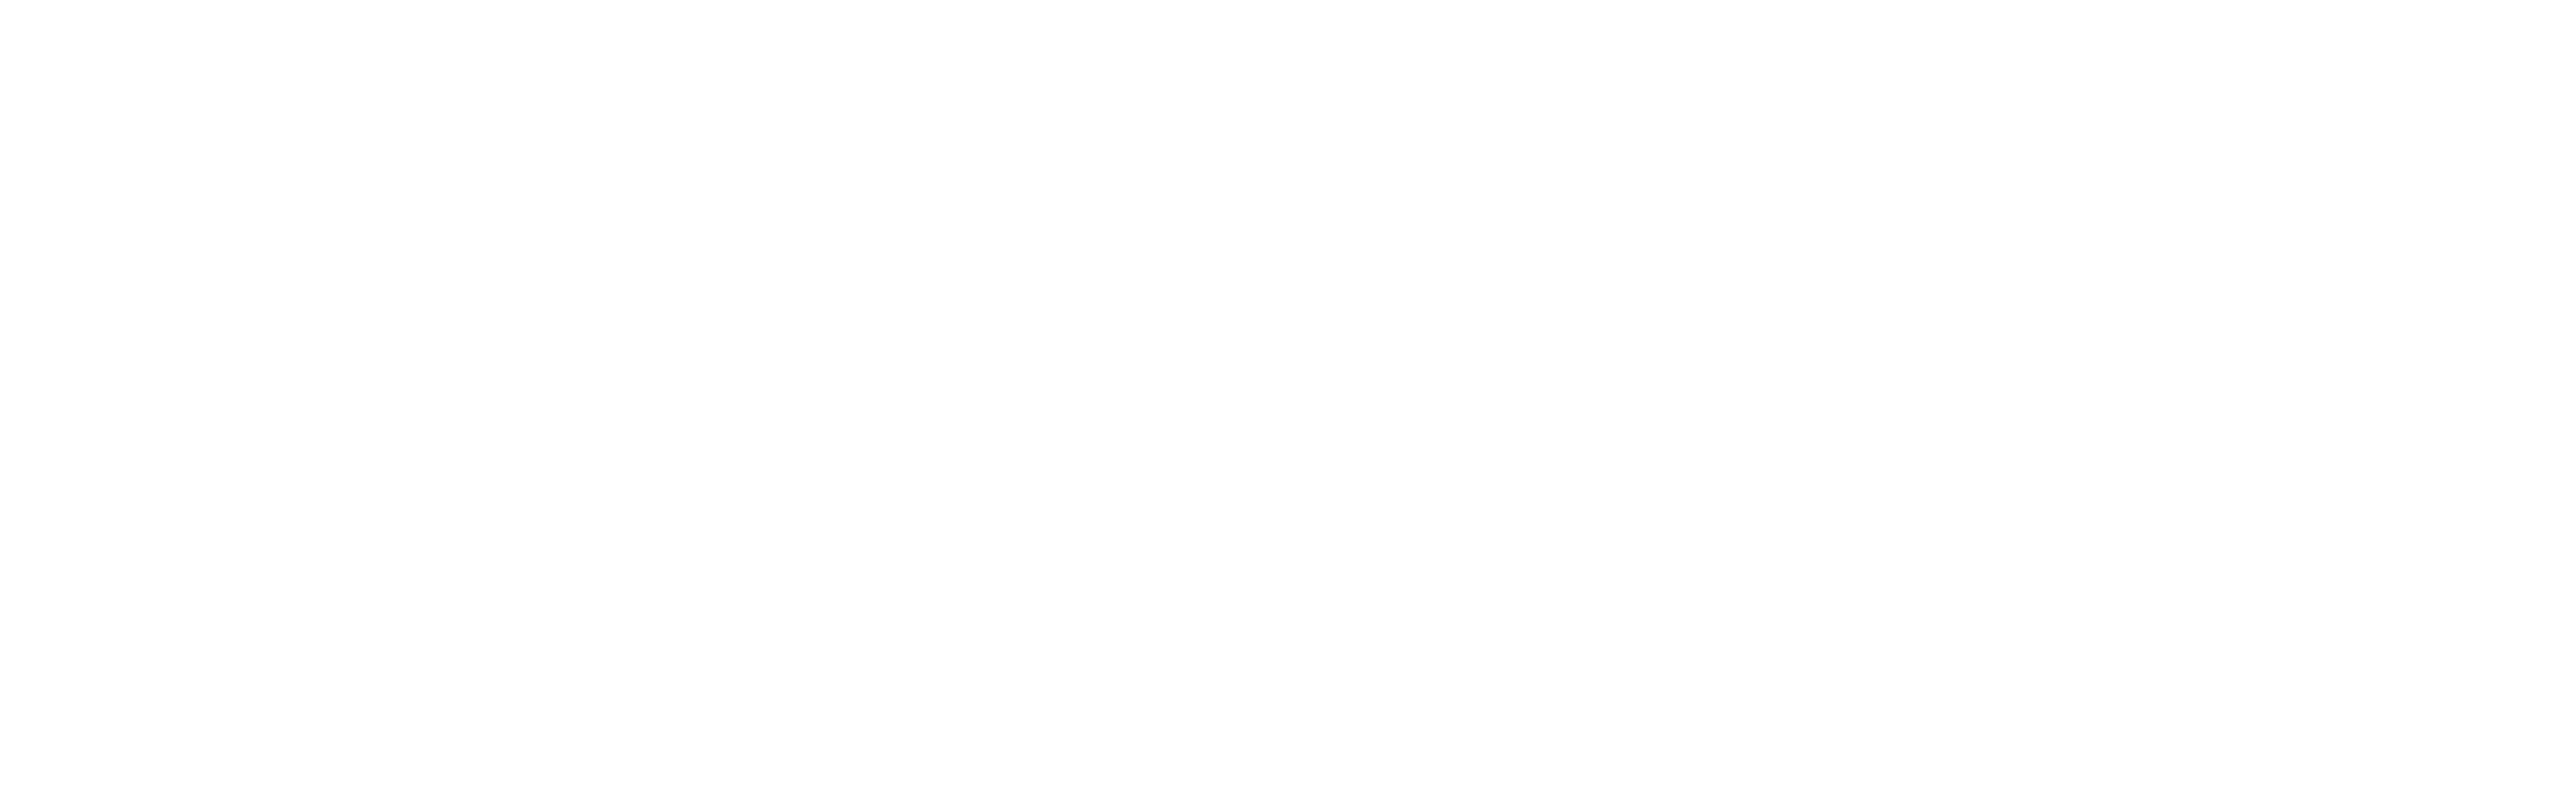 Dot Star Media